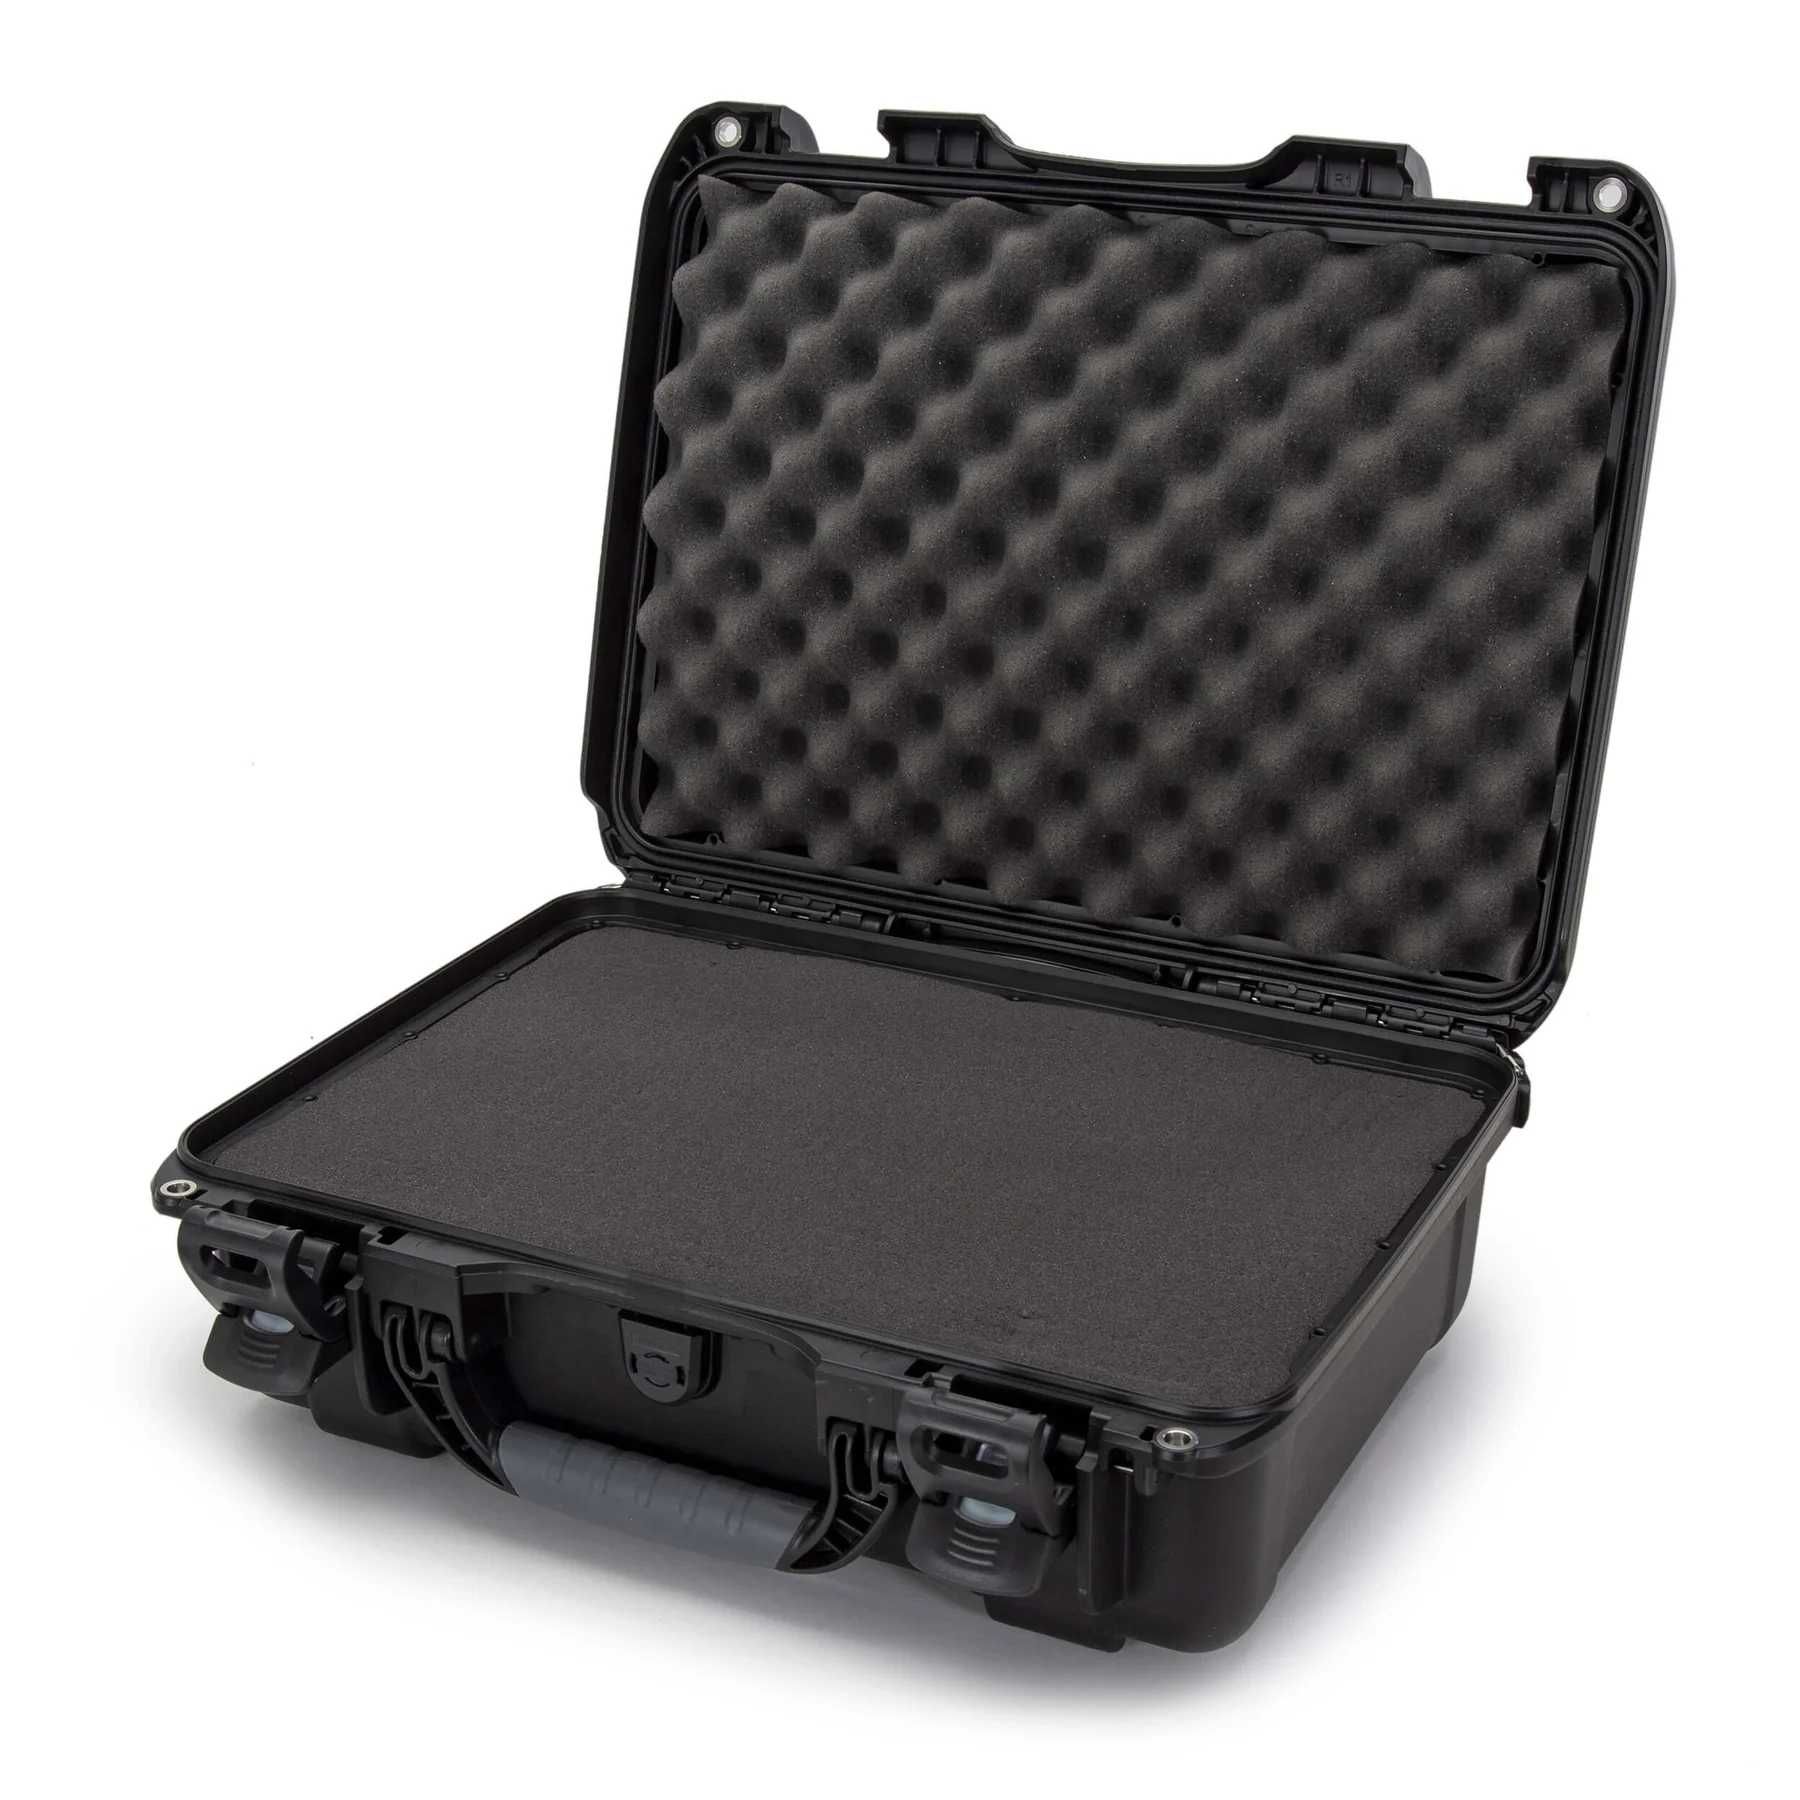 Новый кейс Nanuk 920 для Dji, аппаратуры, техники с пеной чемодан защи